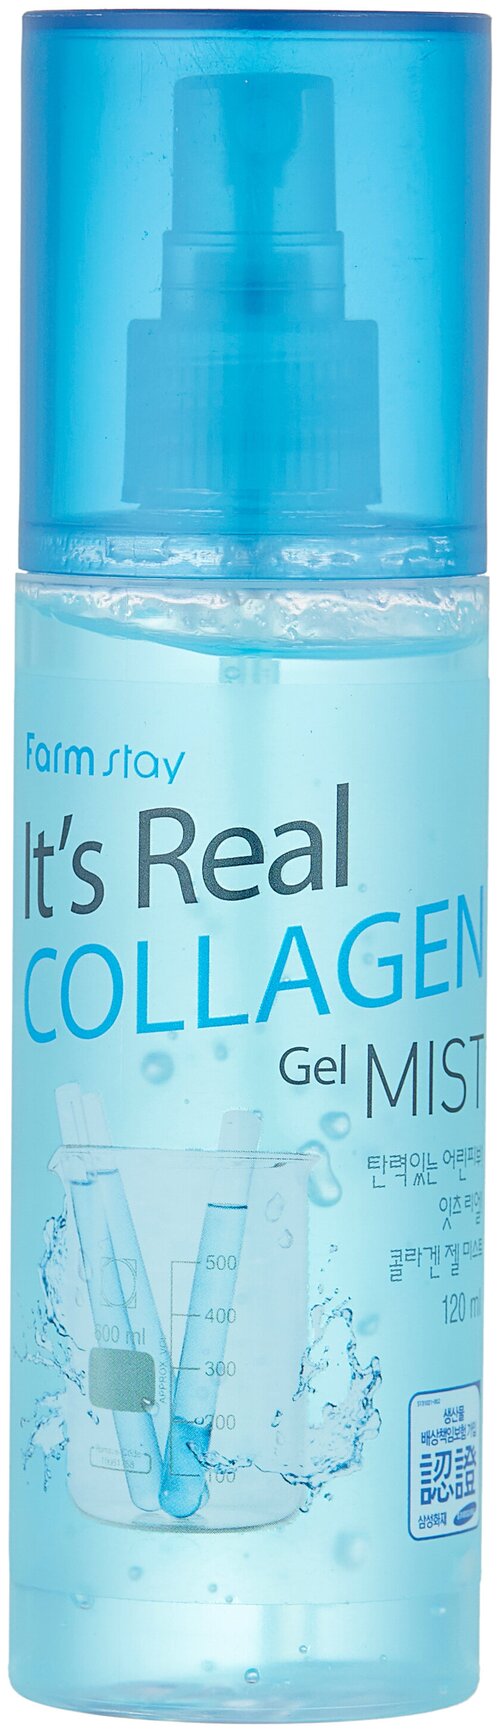 Farmstay Мист для лица с коллагеном Its Real Collagen Gel, 120 мл